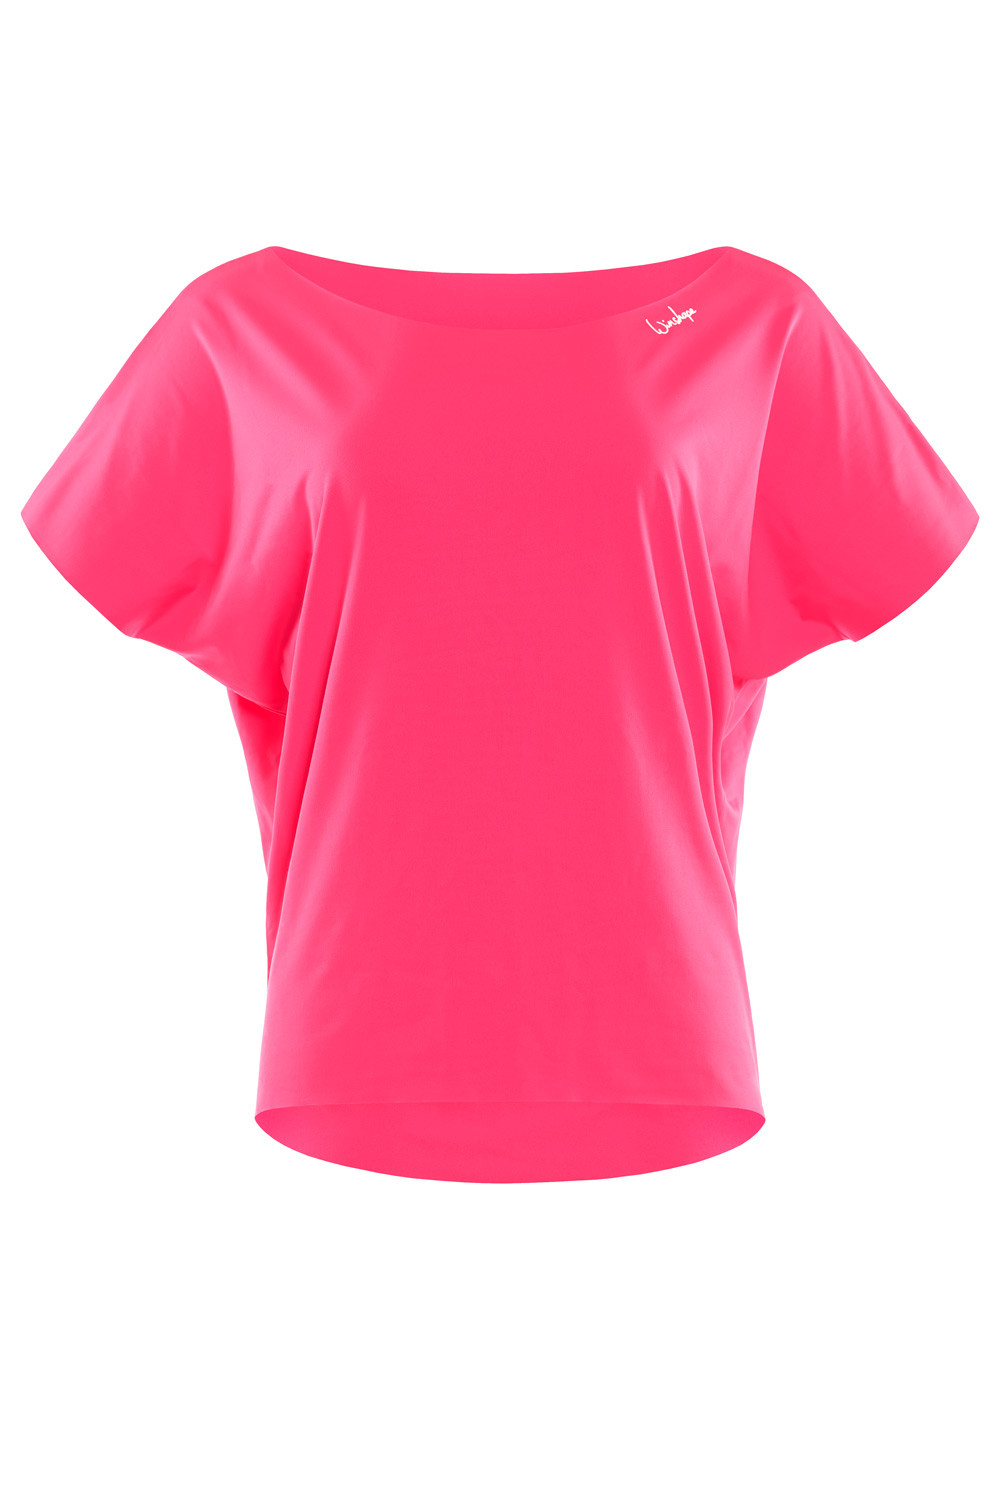 Light Winshape pink, Functional Dance-Top Dance Style neon DT101,